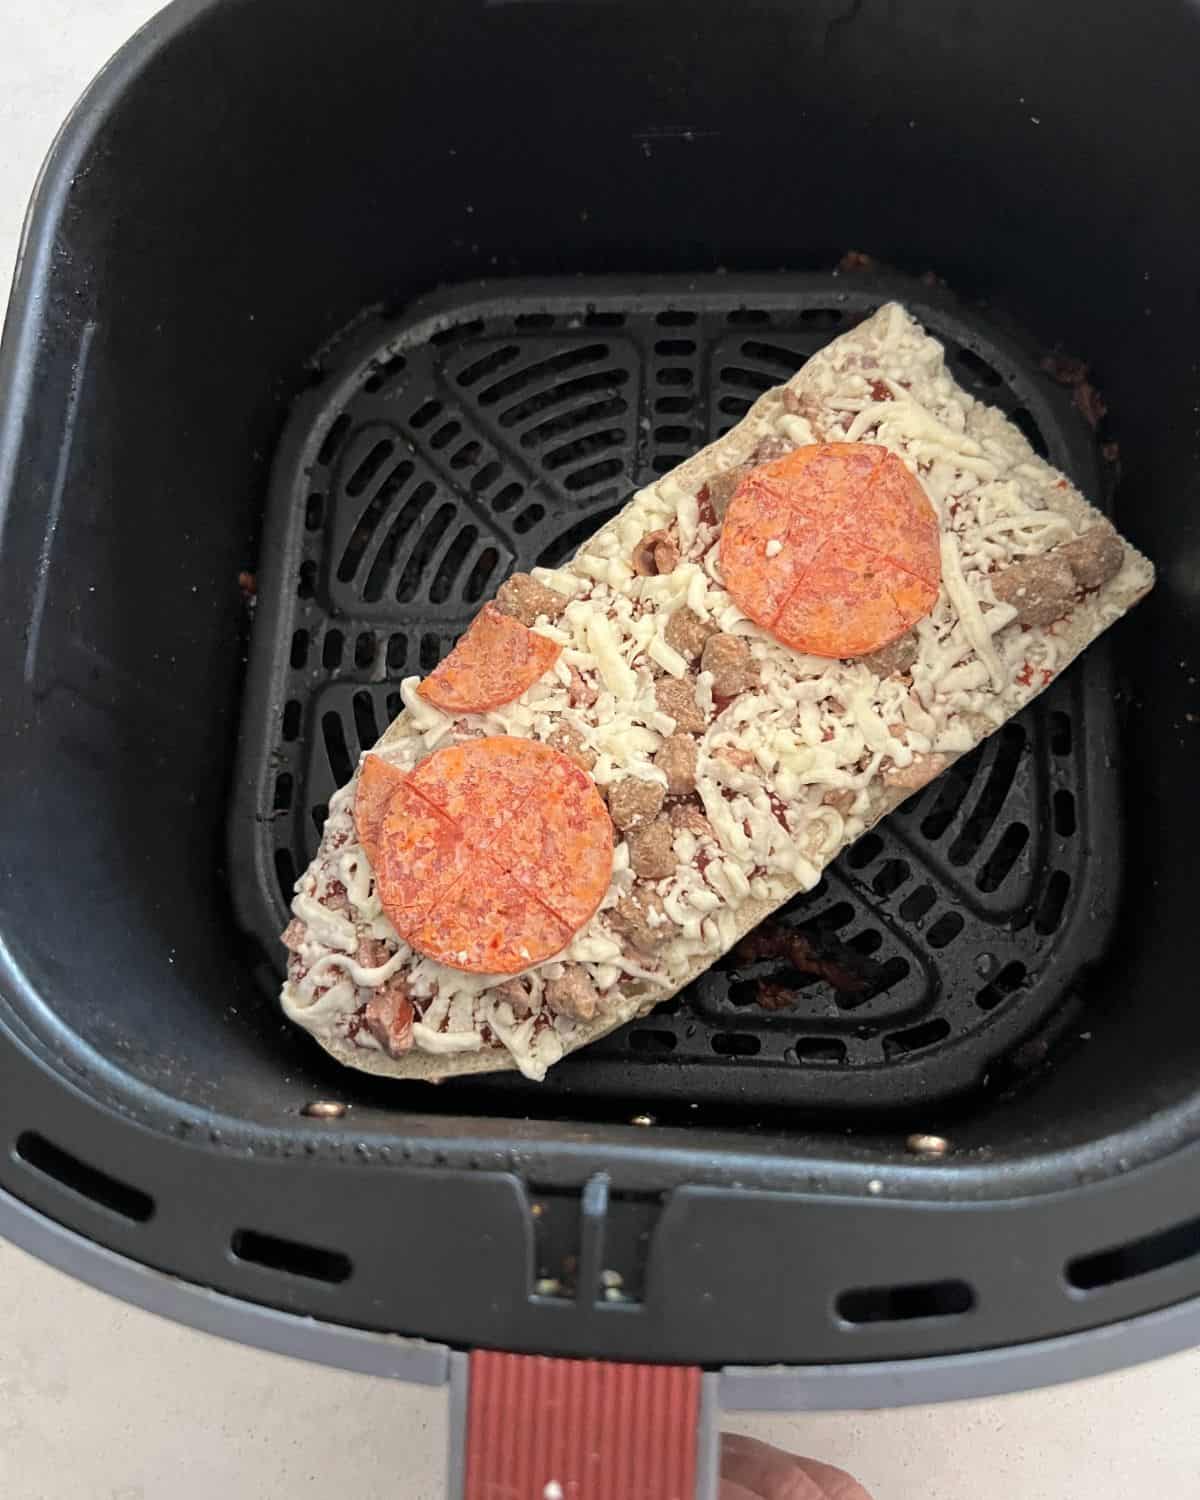 Frozen Red Baron pizza in air fryer basket. 